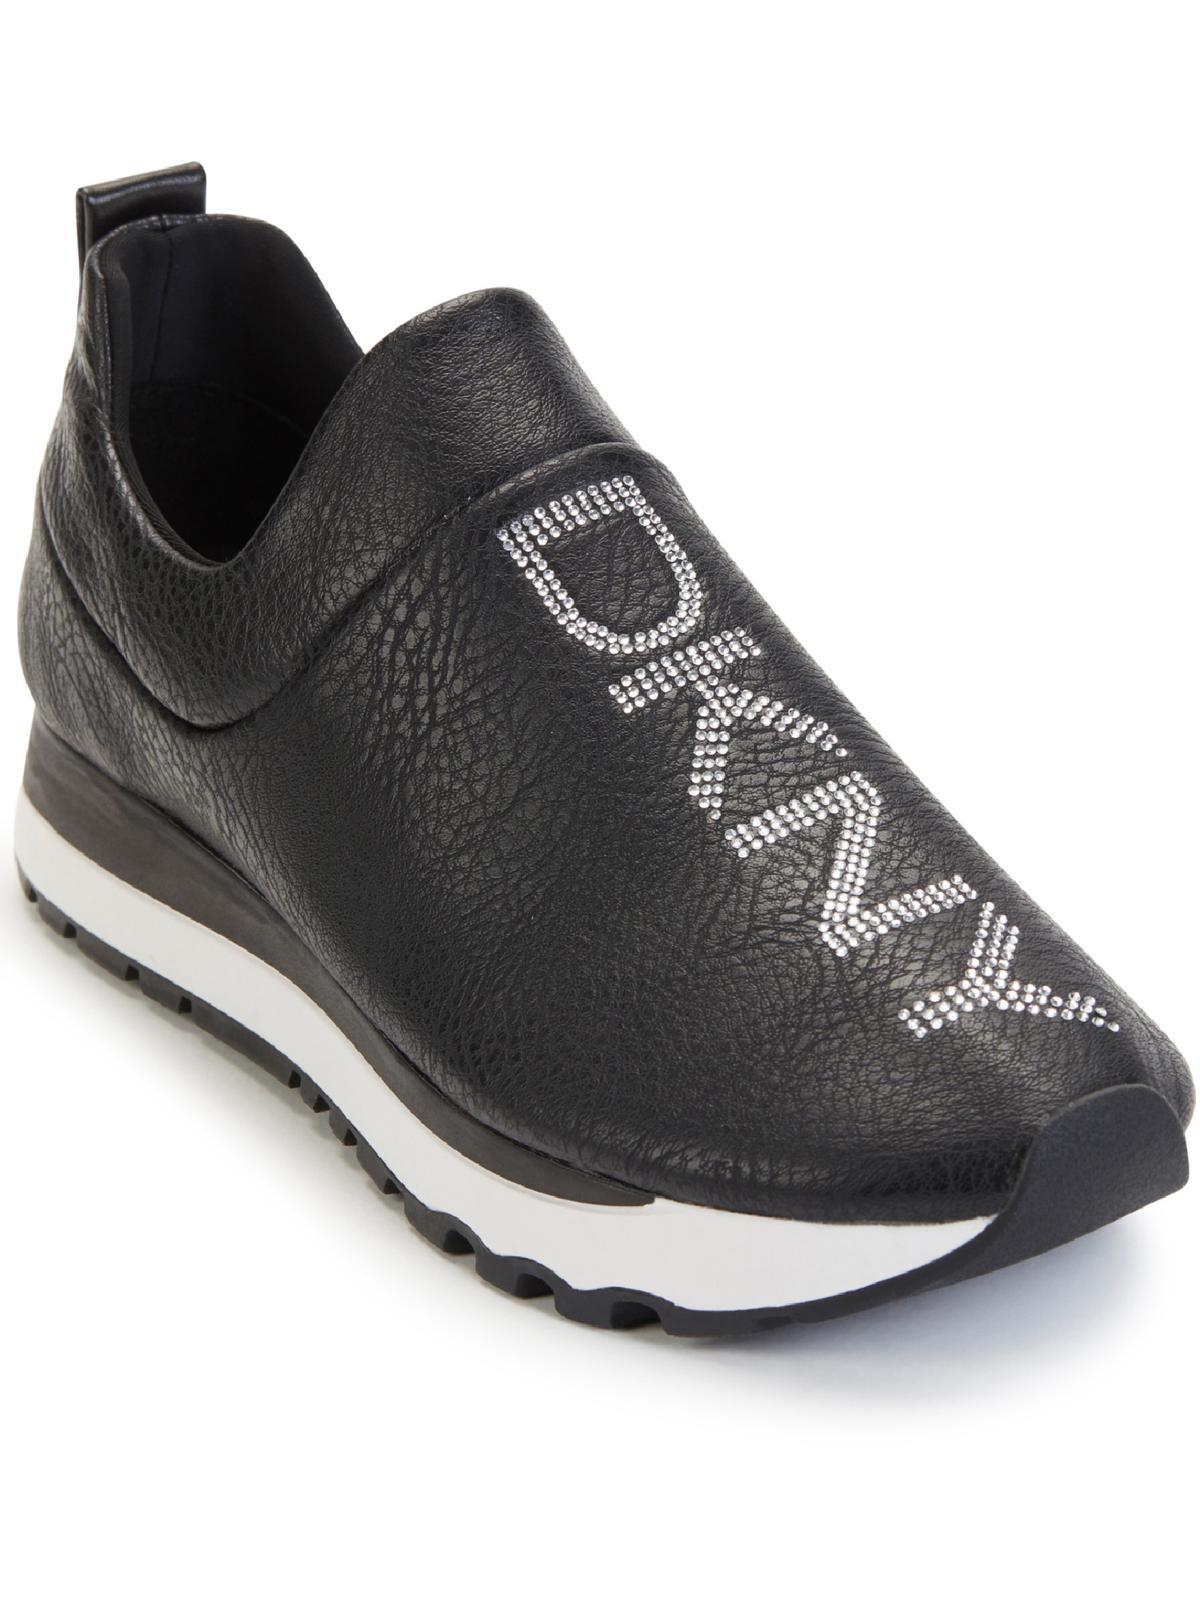 DKNY Jadyn Faux Leather Lifestyle Slip-on Sneakers in Black | Lyst